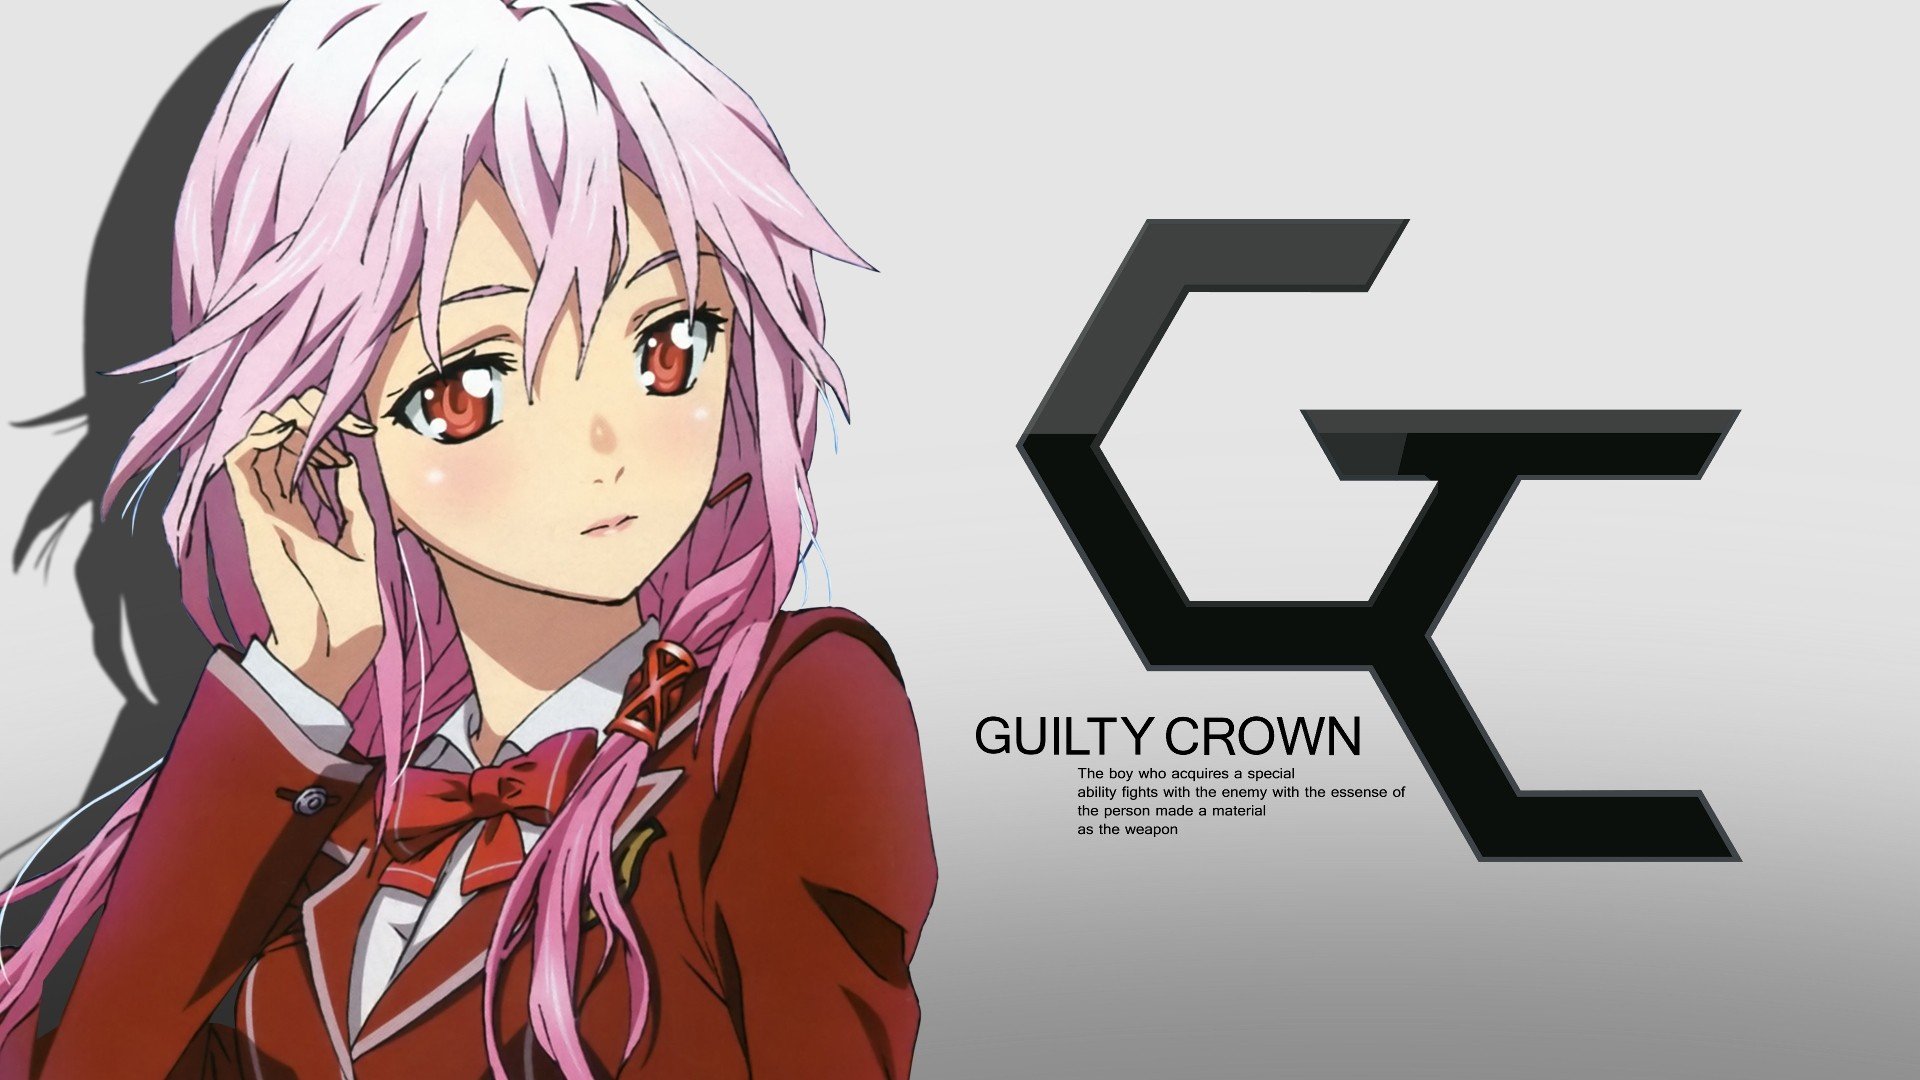 10. Inori Yuzuriha from Guilty Crown - wide 7